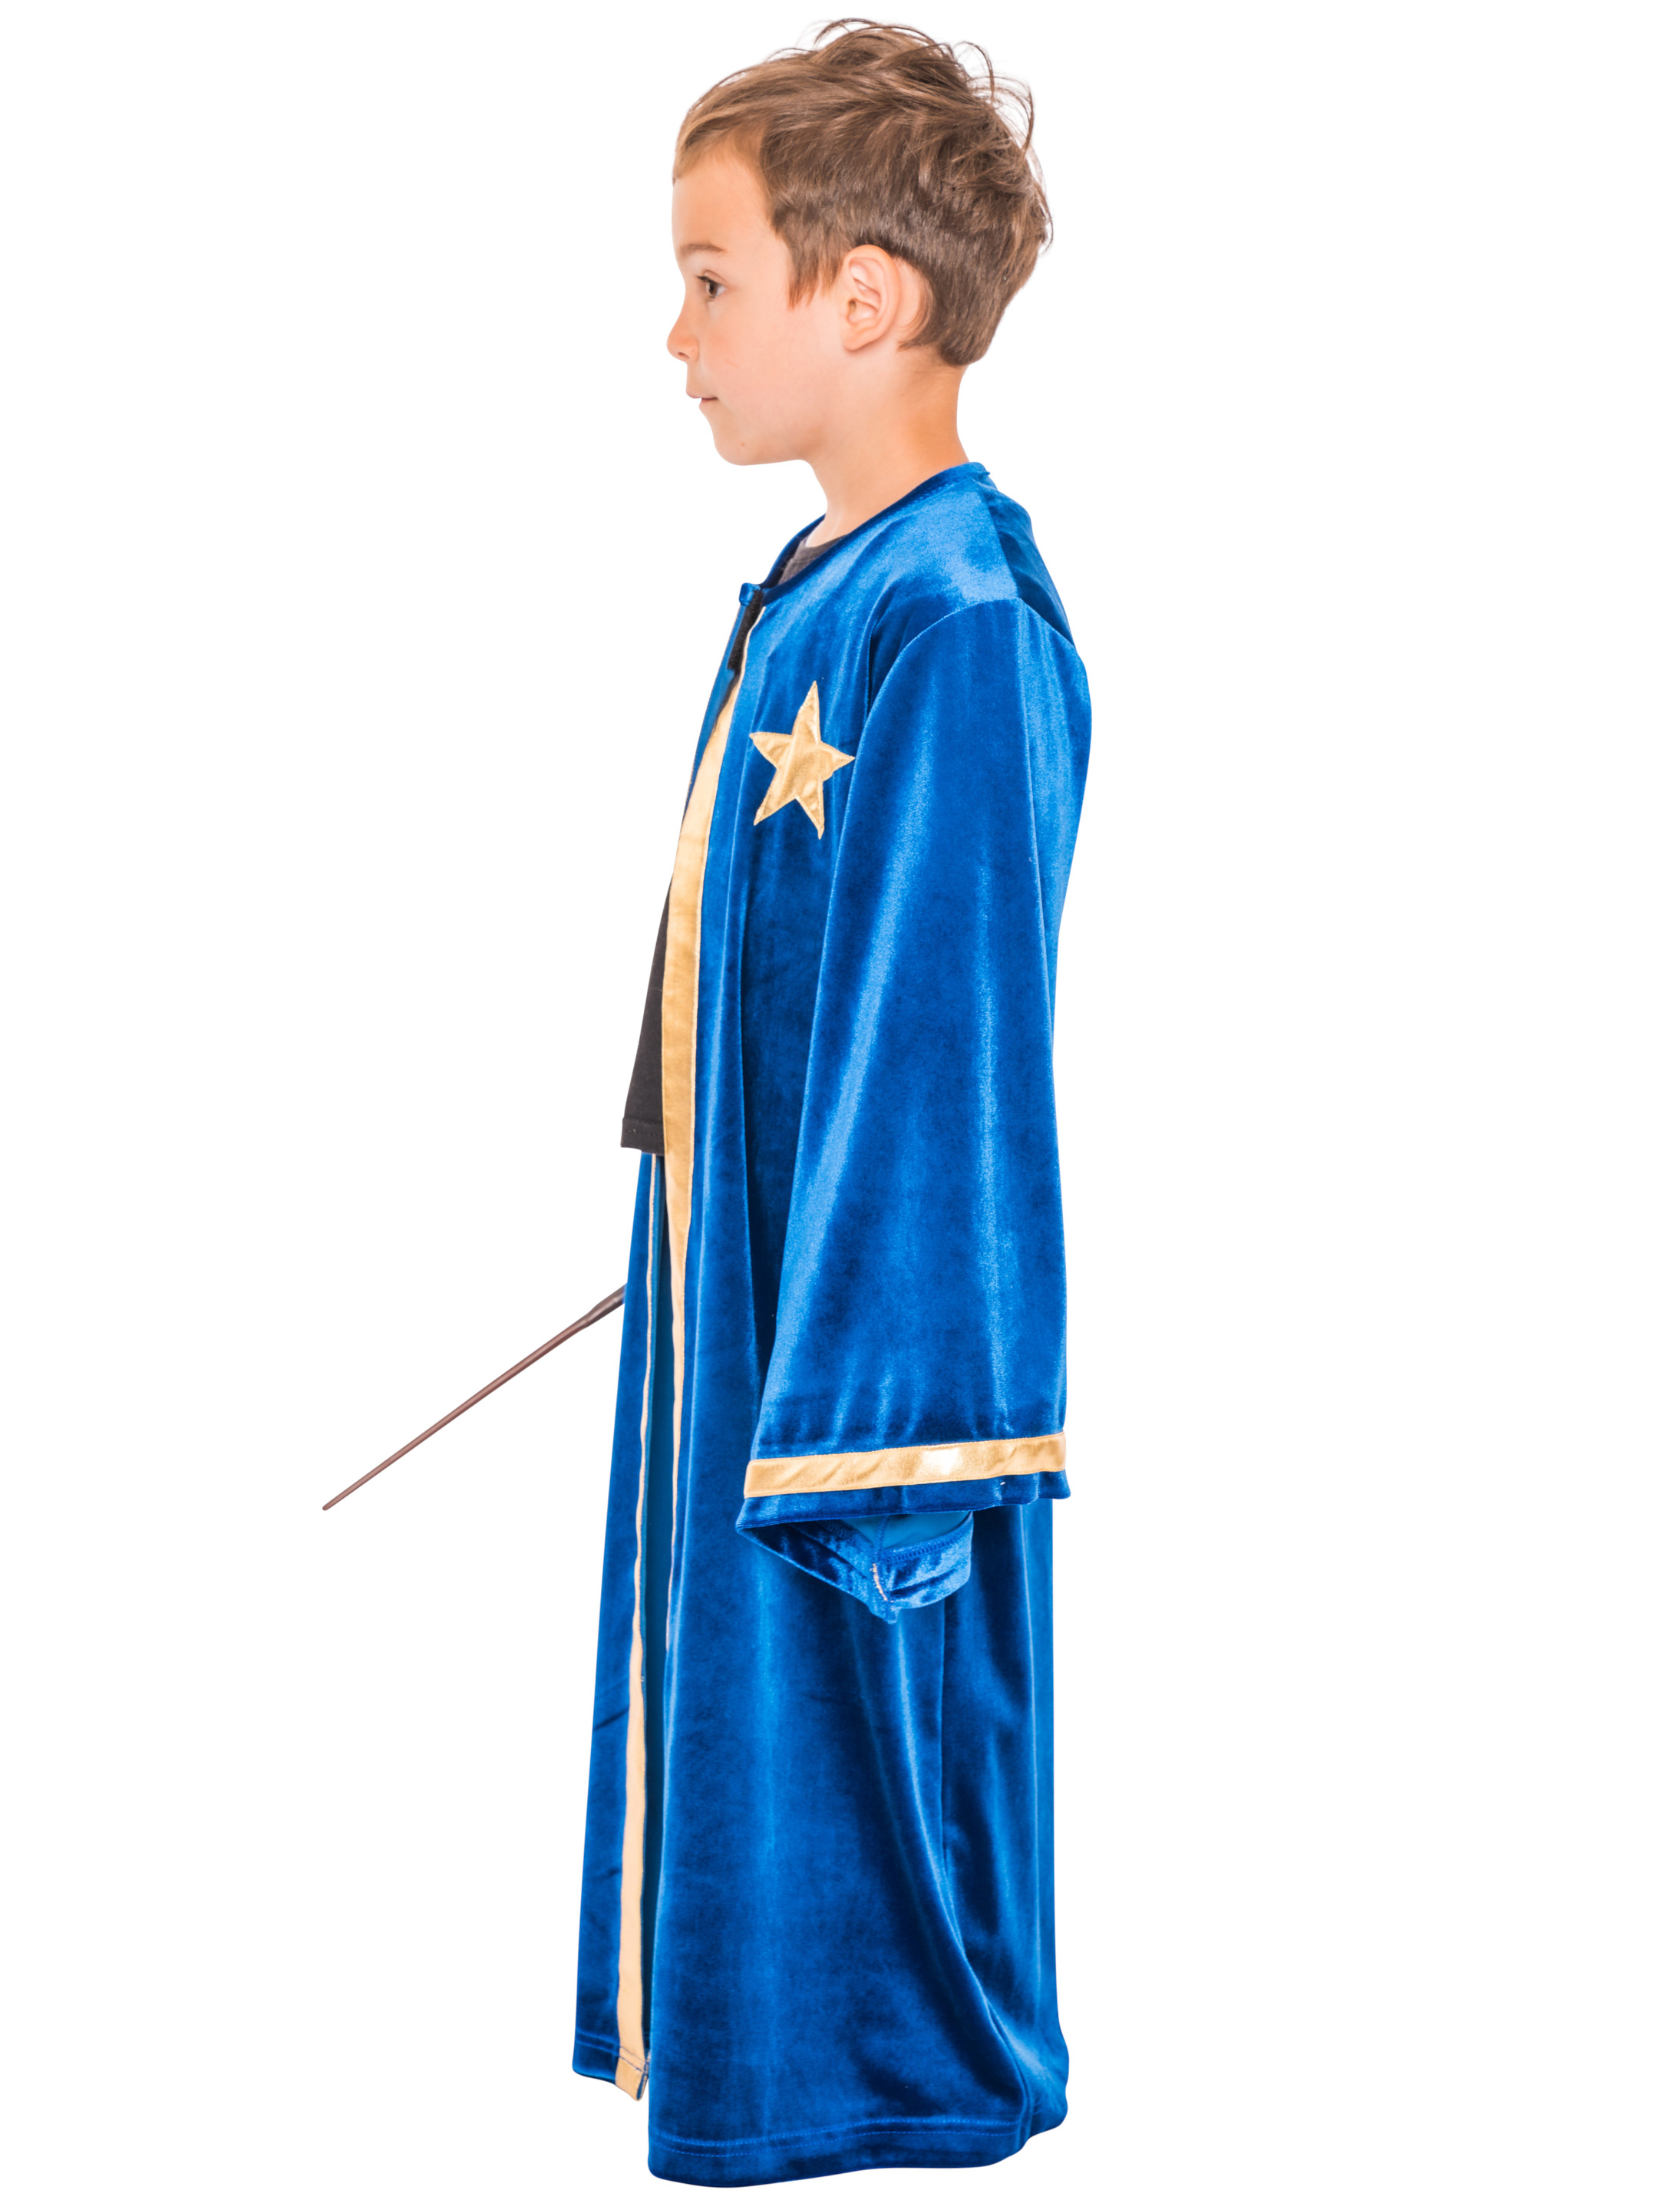 Mantel Zauberer Kinder blau 104